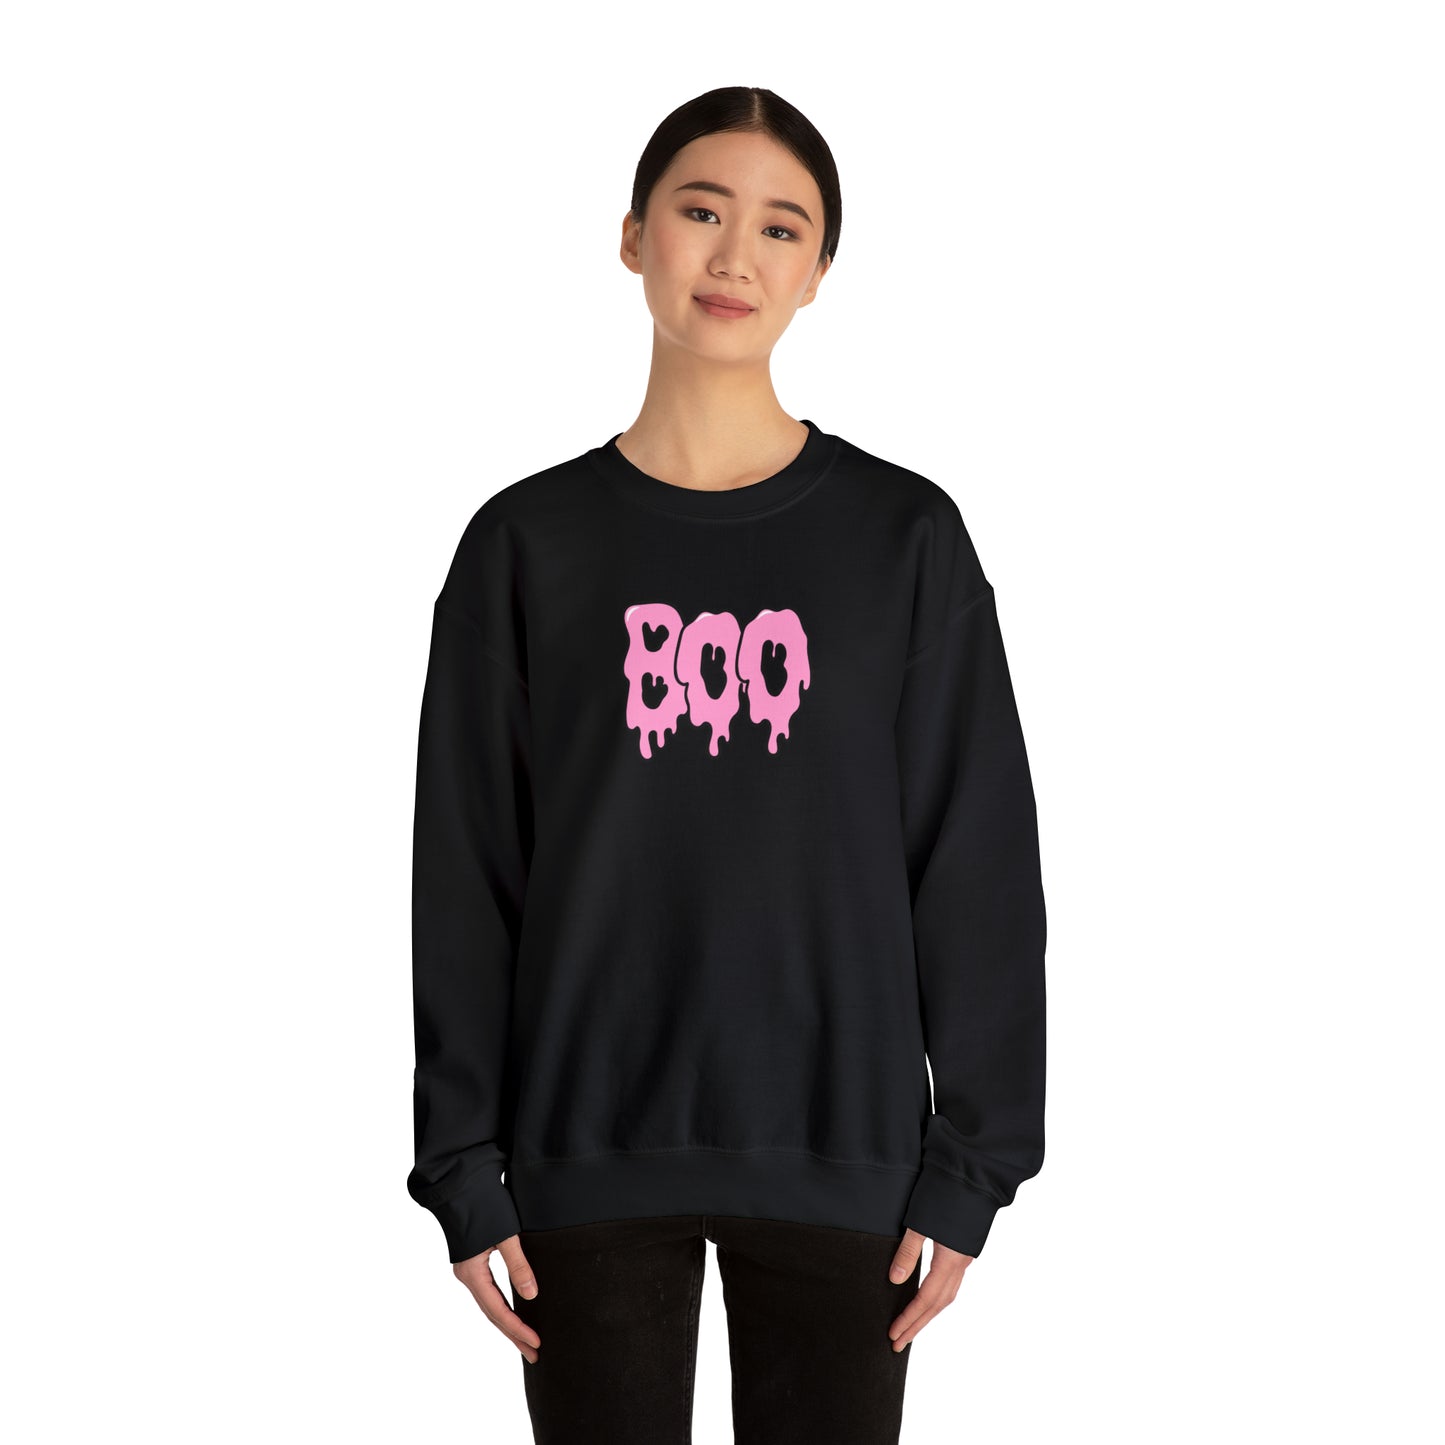 Boo & Boo-tiful Sweatshirt